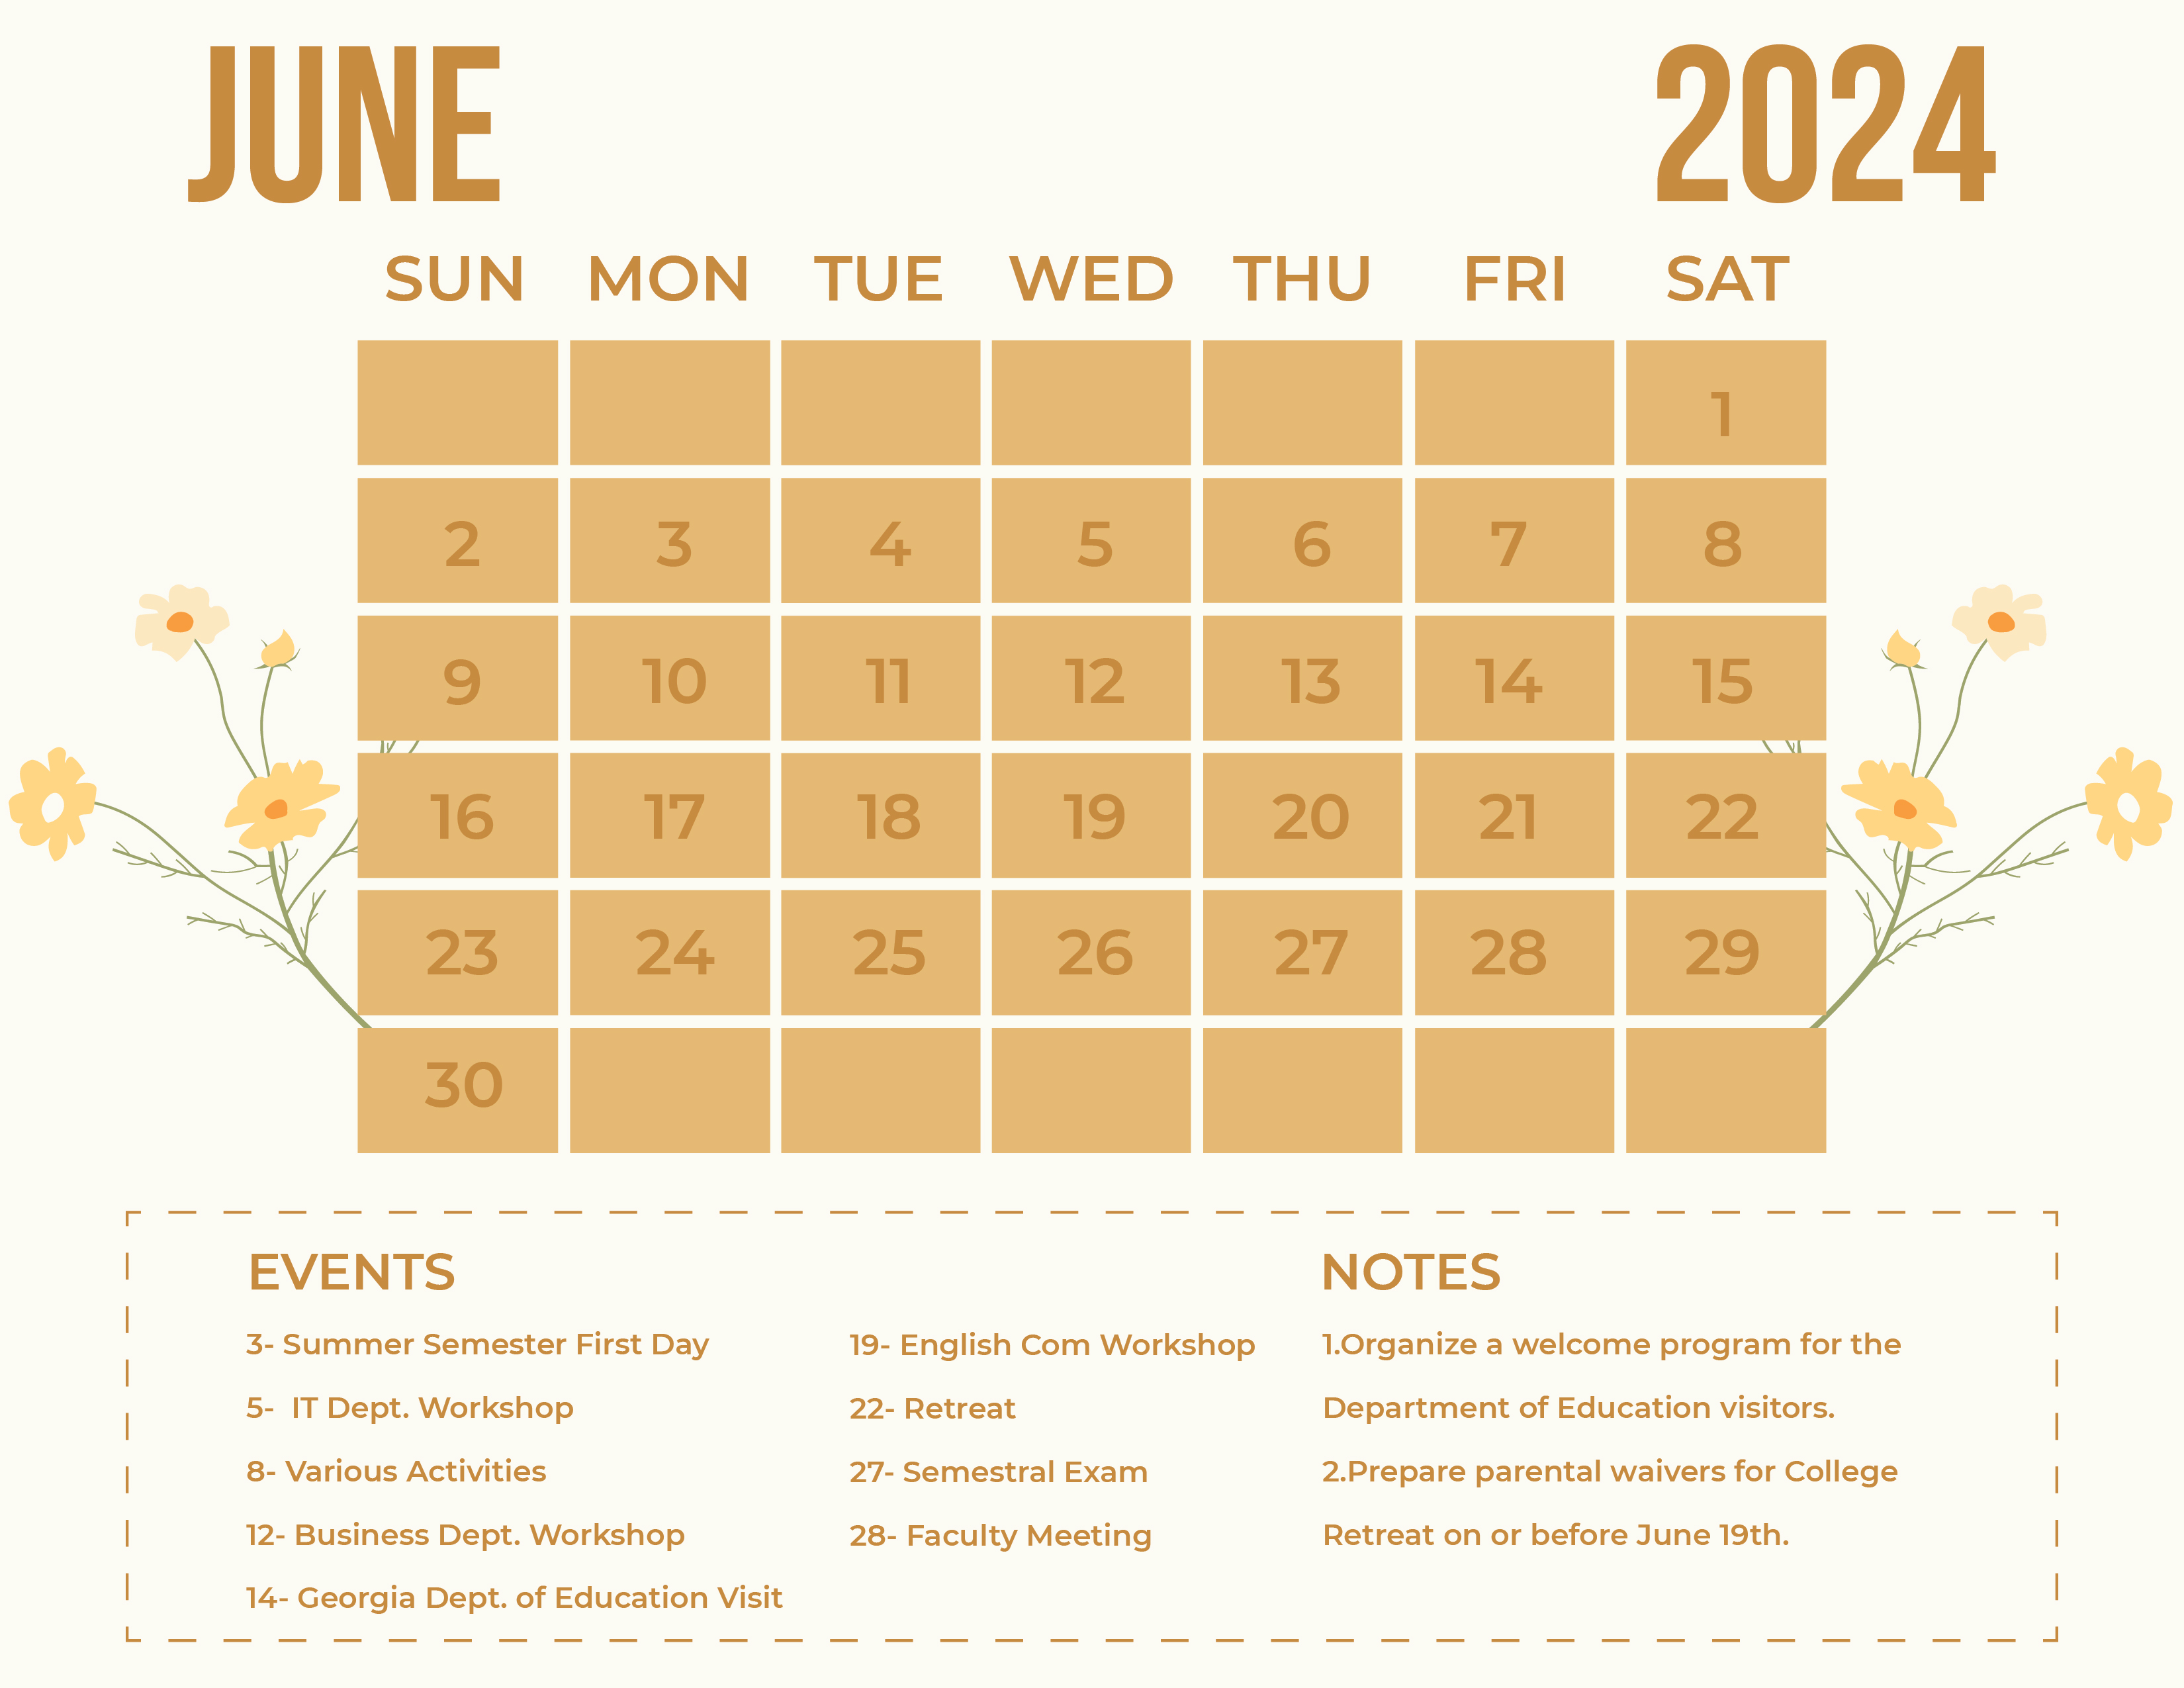 Free Pretty June 2024 Calendar Download in Word, Illustrator, EPS